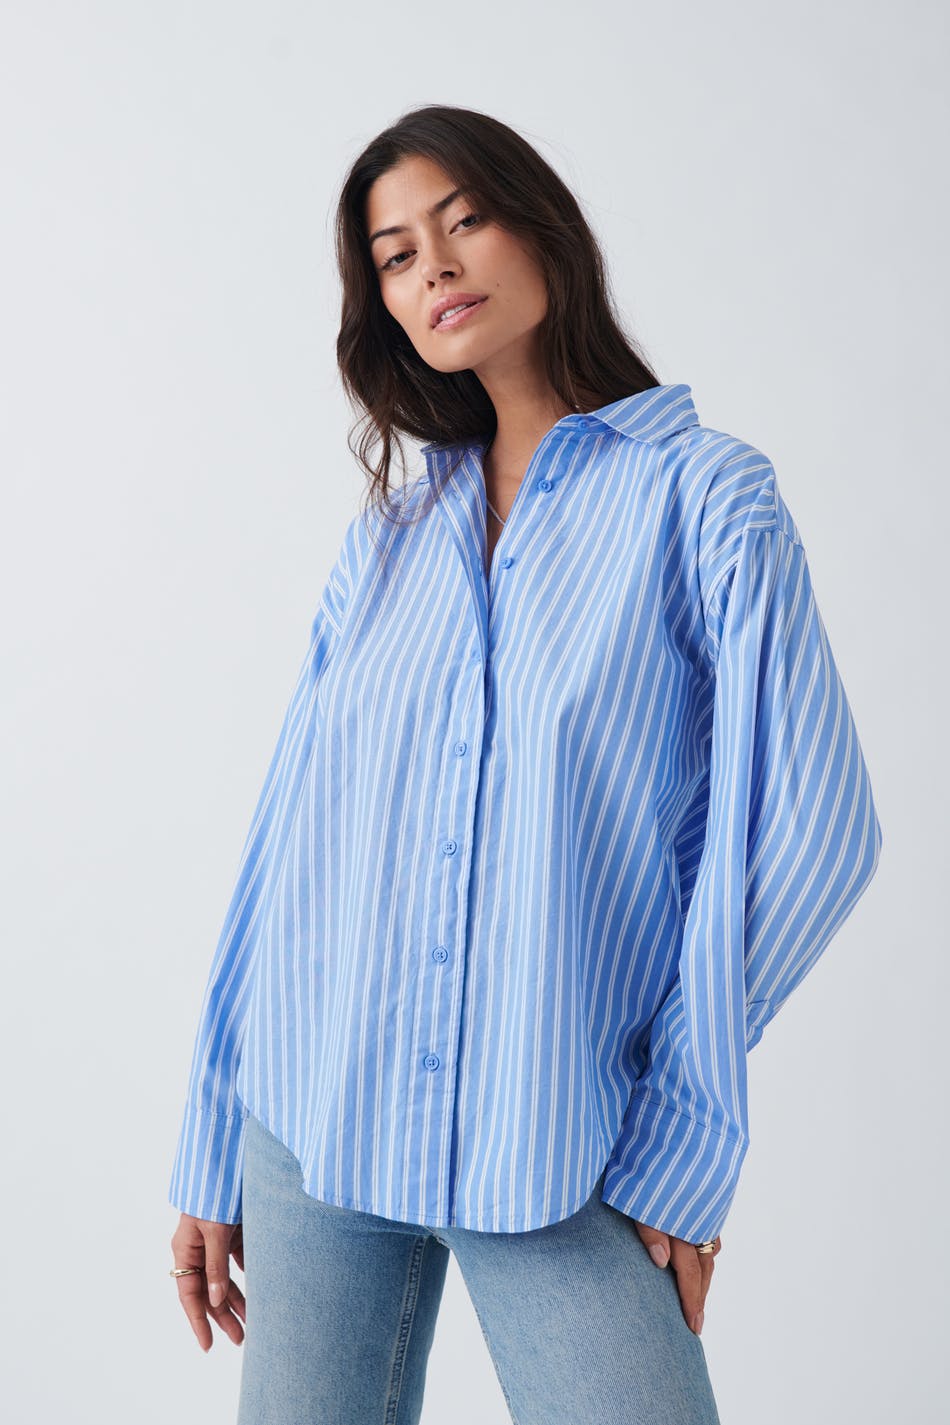 Gina Tricot - Poplin shirt - skjortor - Blue - S - Female